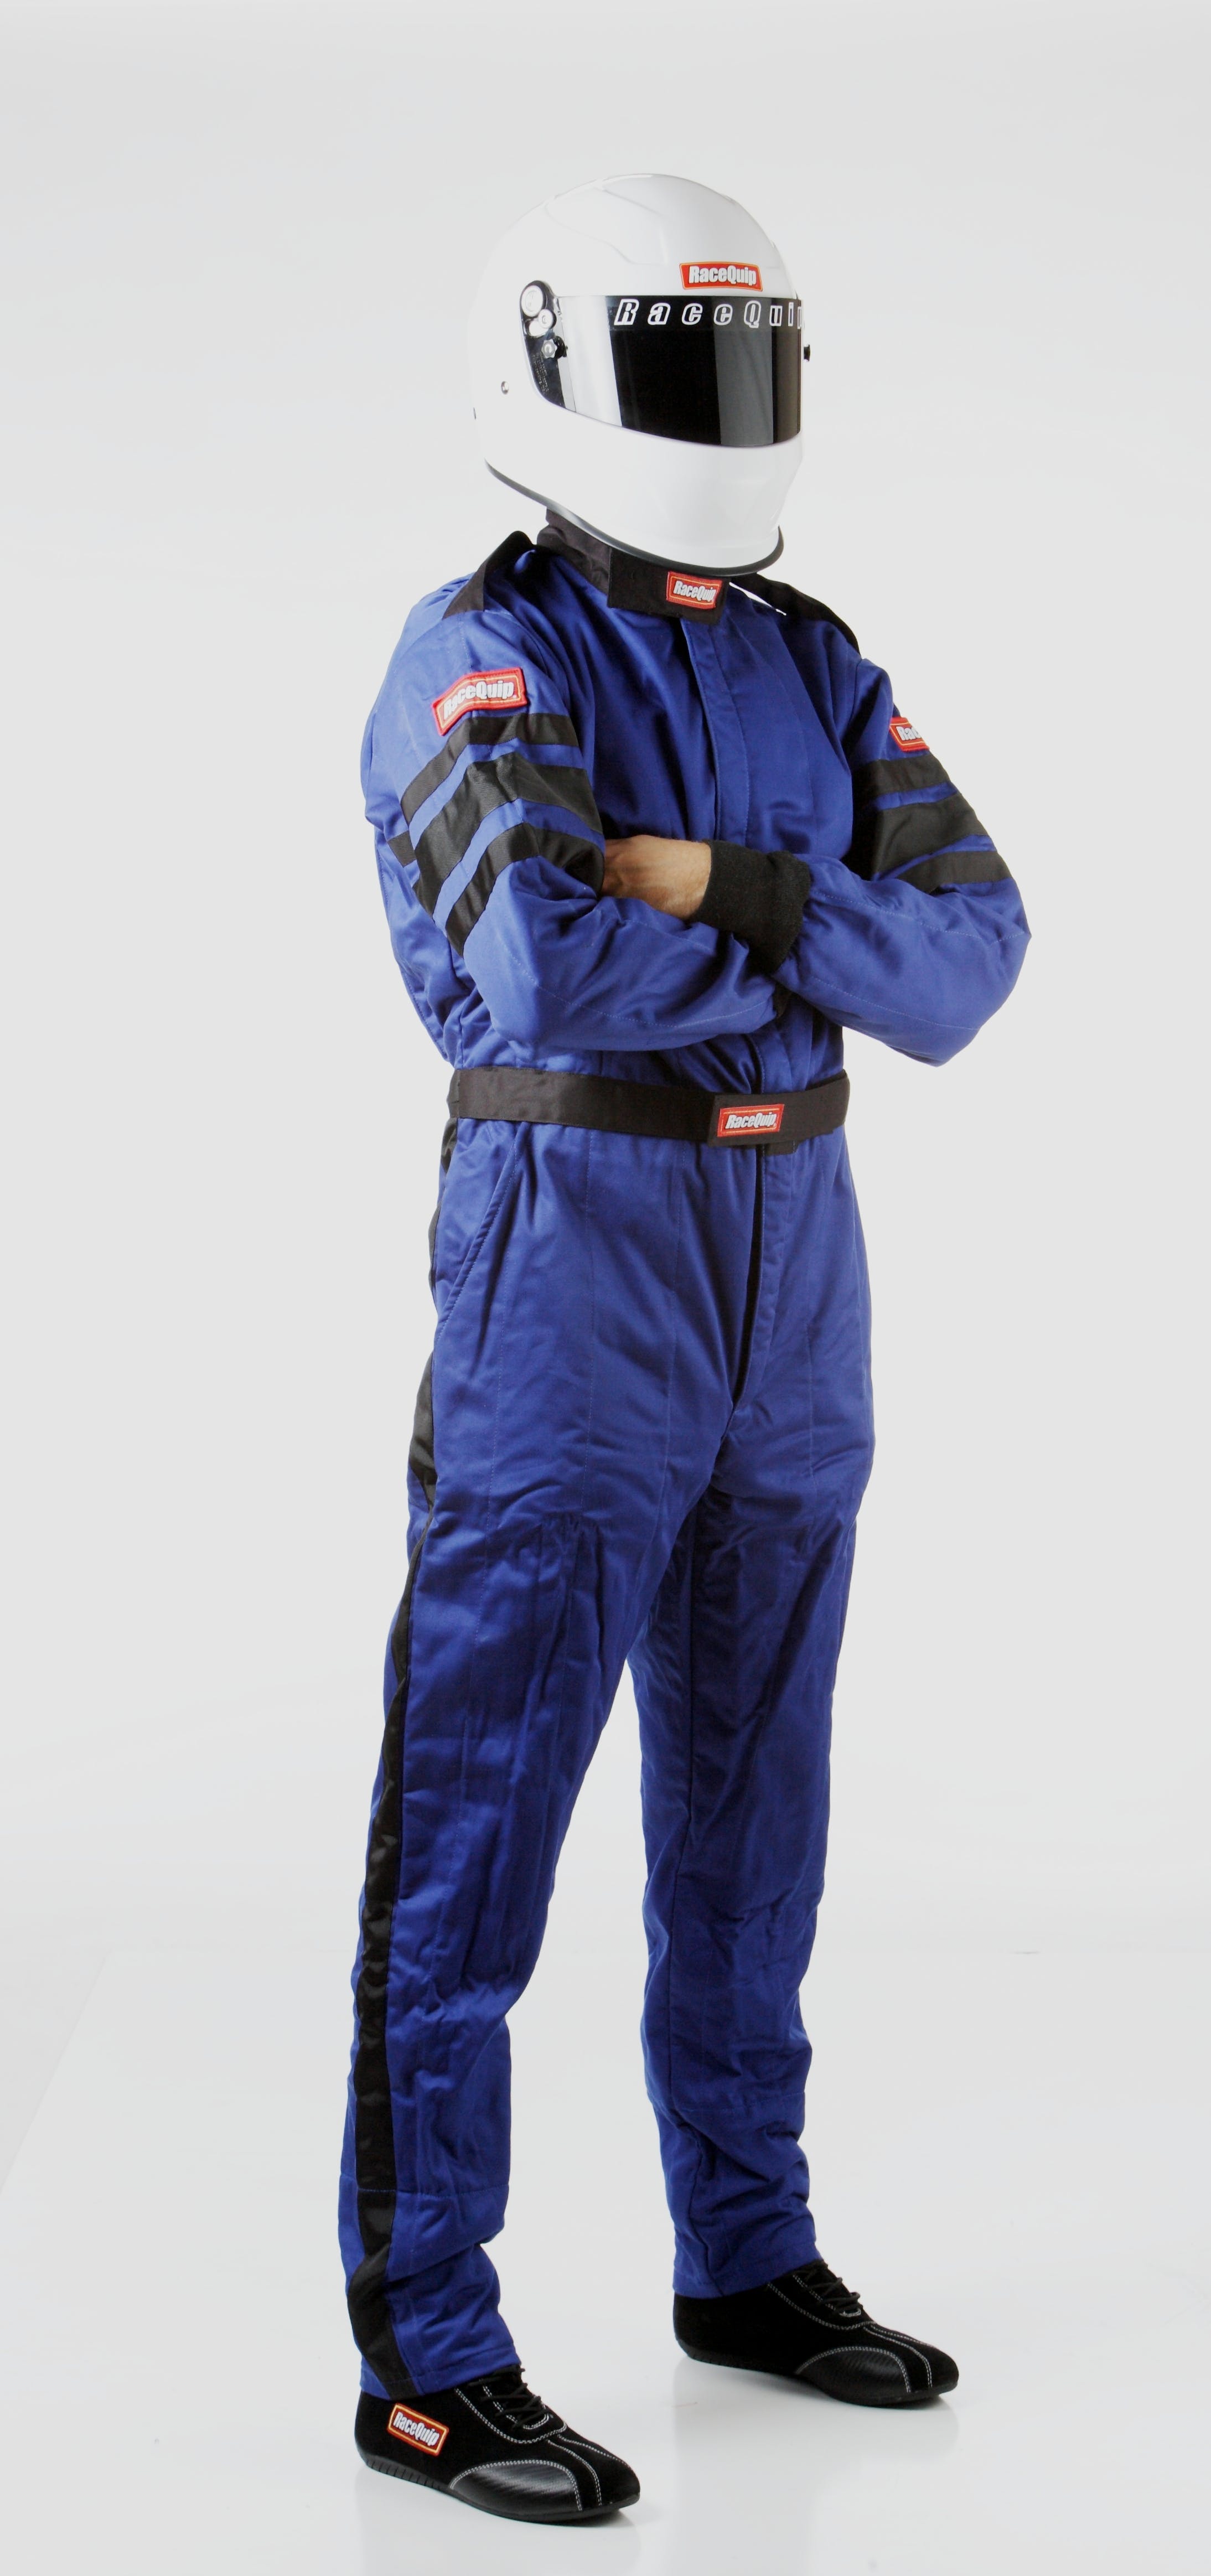 RaceQuip 120023 SFI-5 Pyrovatex One-Piece Multi-Layer Racing Fire Suit (Blue, Medium)